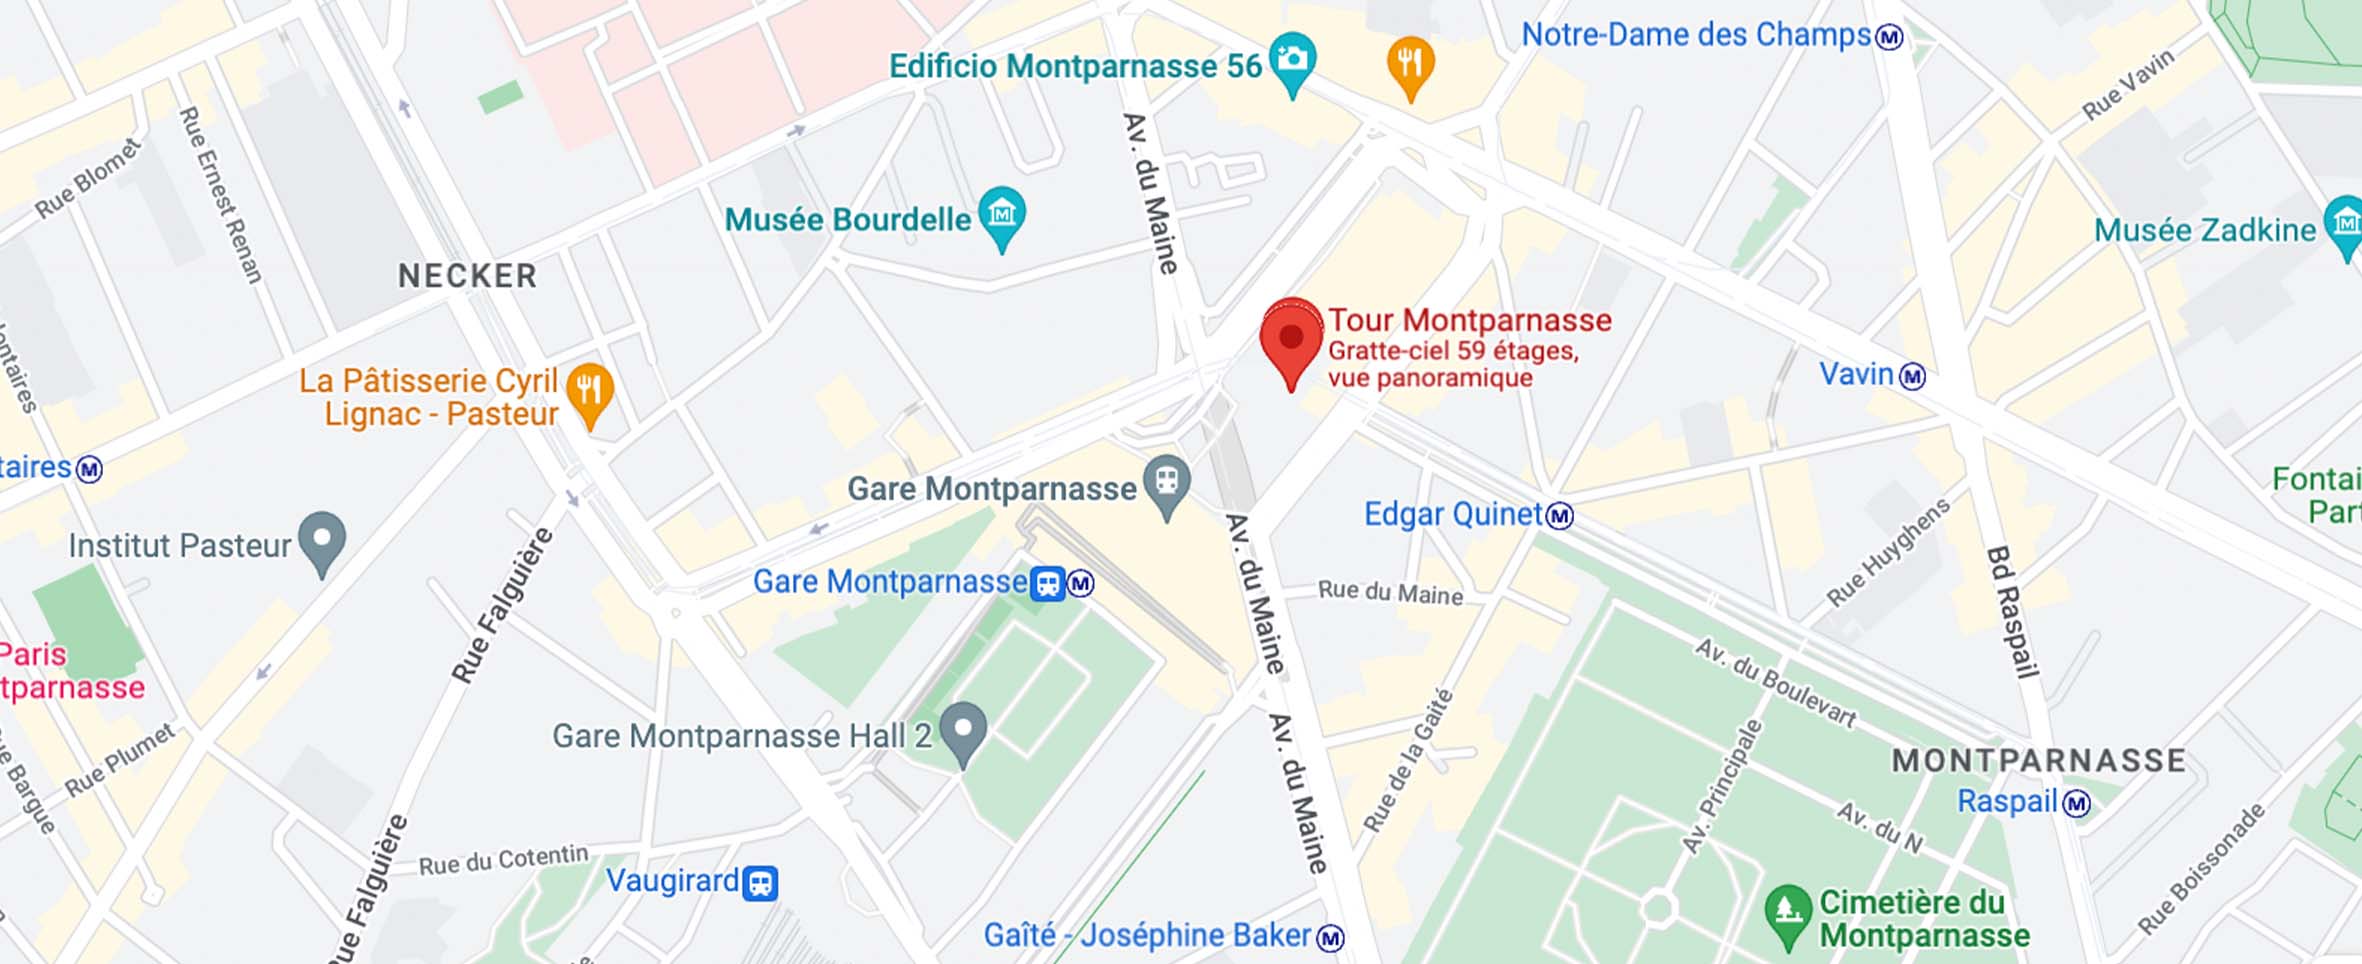 Mapa para llegar a la torre Montparnasse